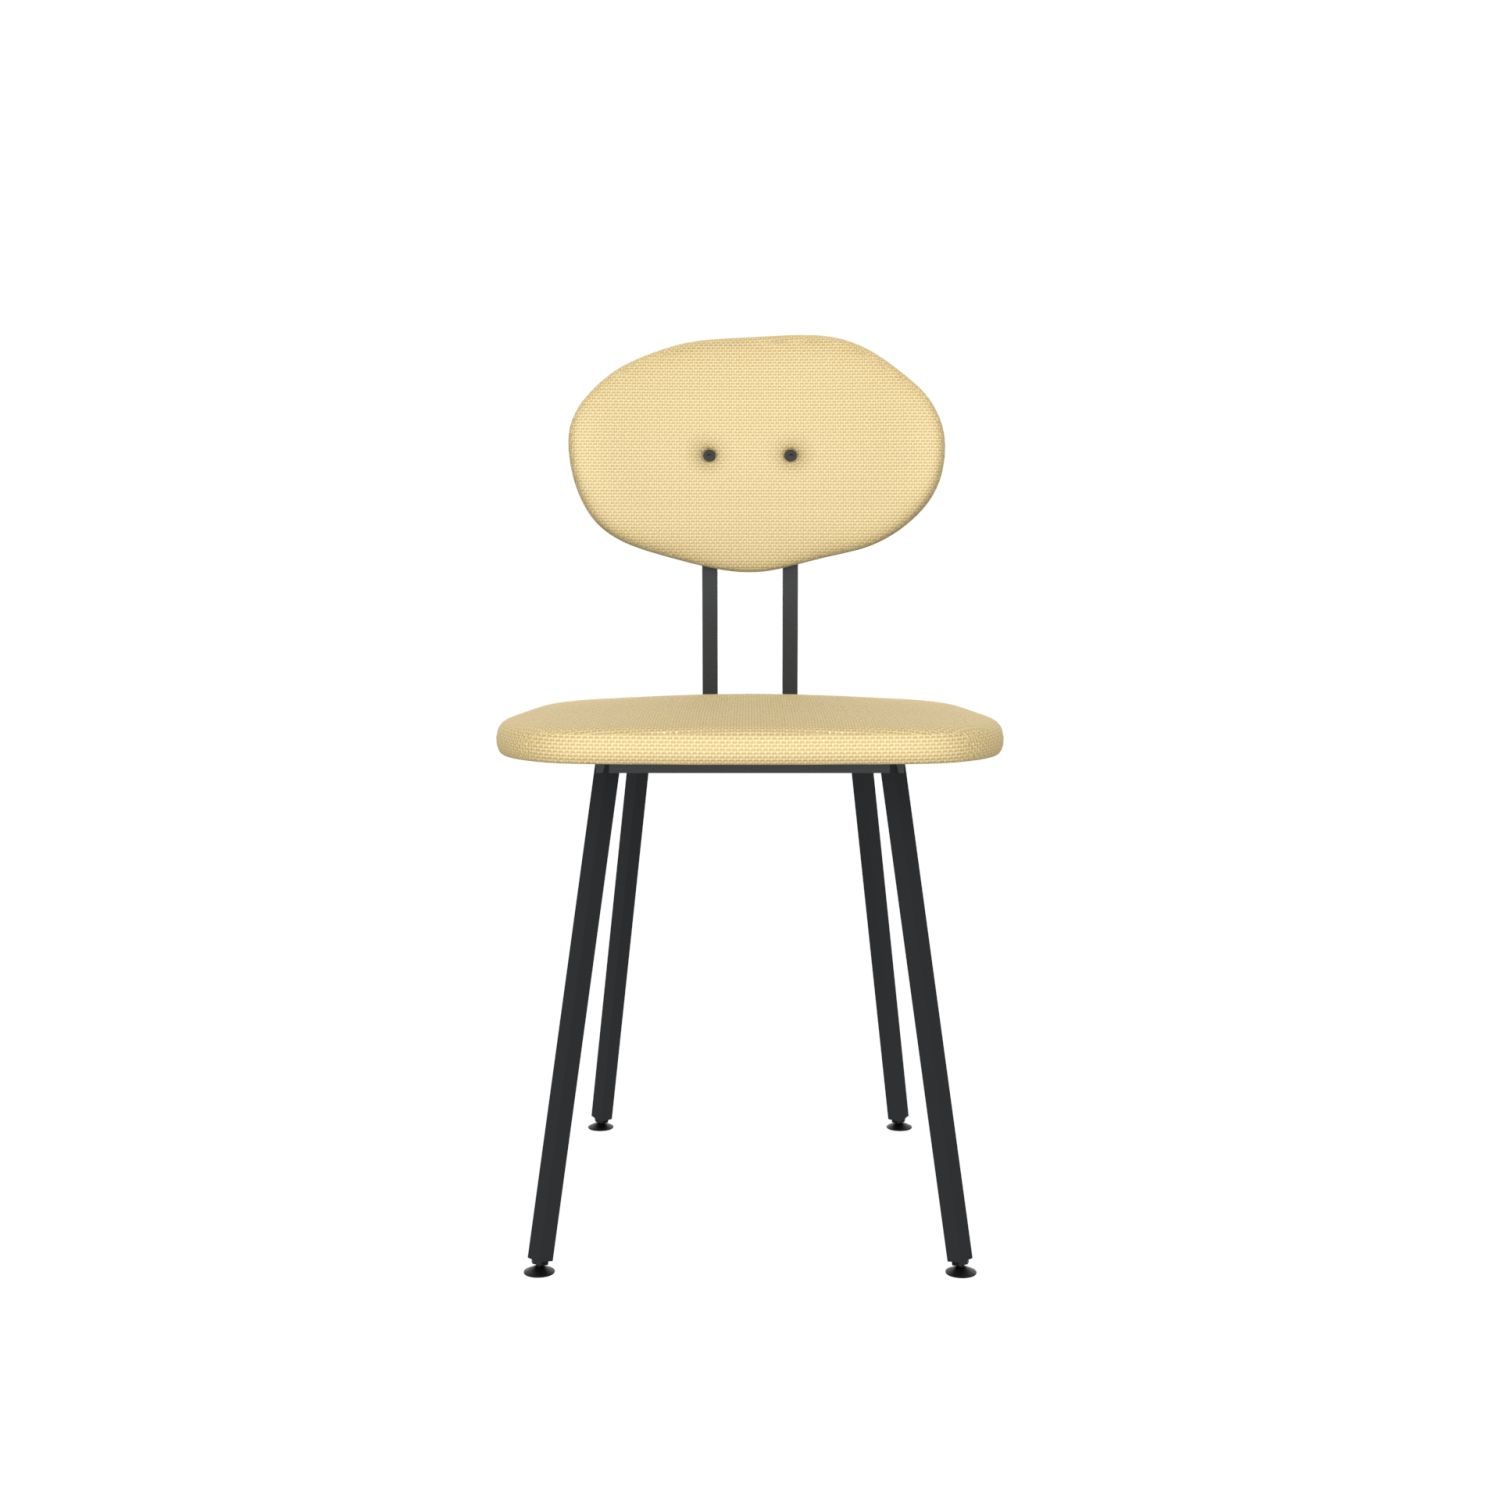 lensvelt maarten baas chair 101 not stackable without armrests backrest d light brown 141 black ral9005 hard leg ends